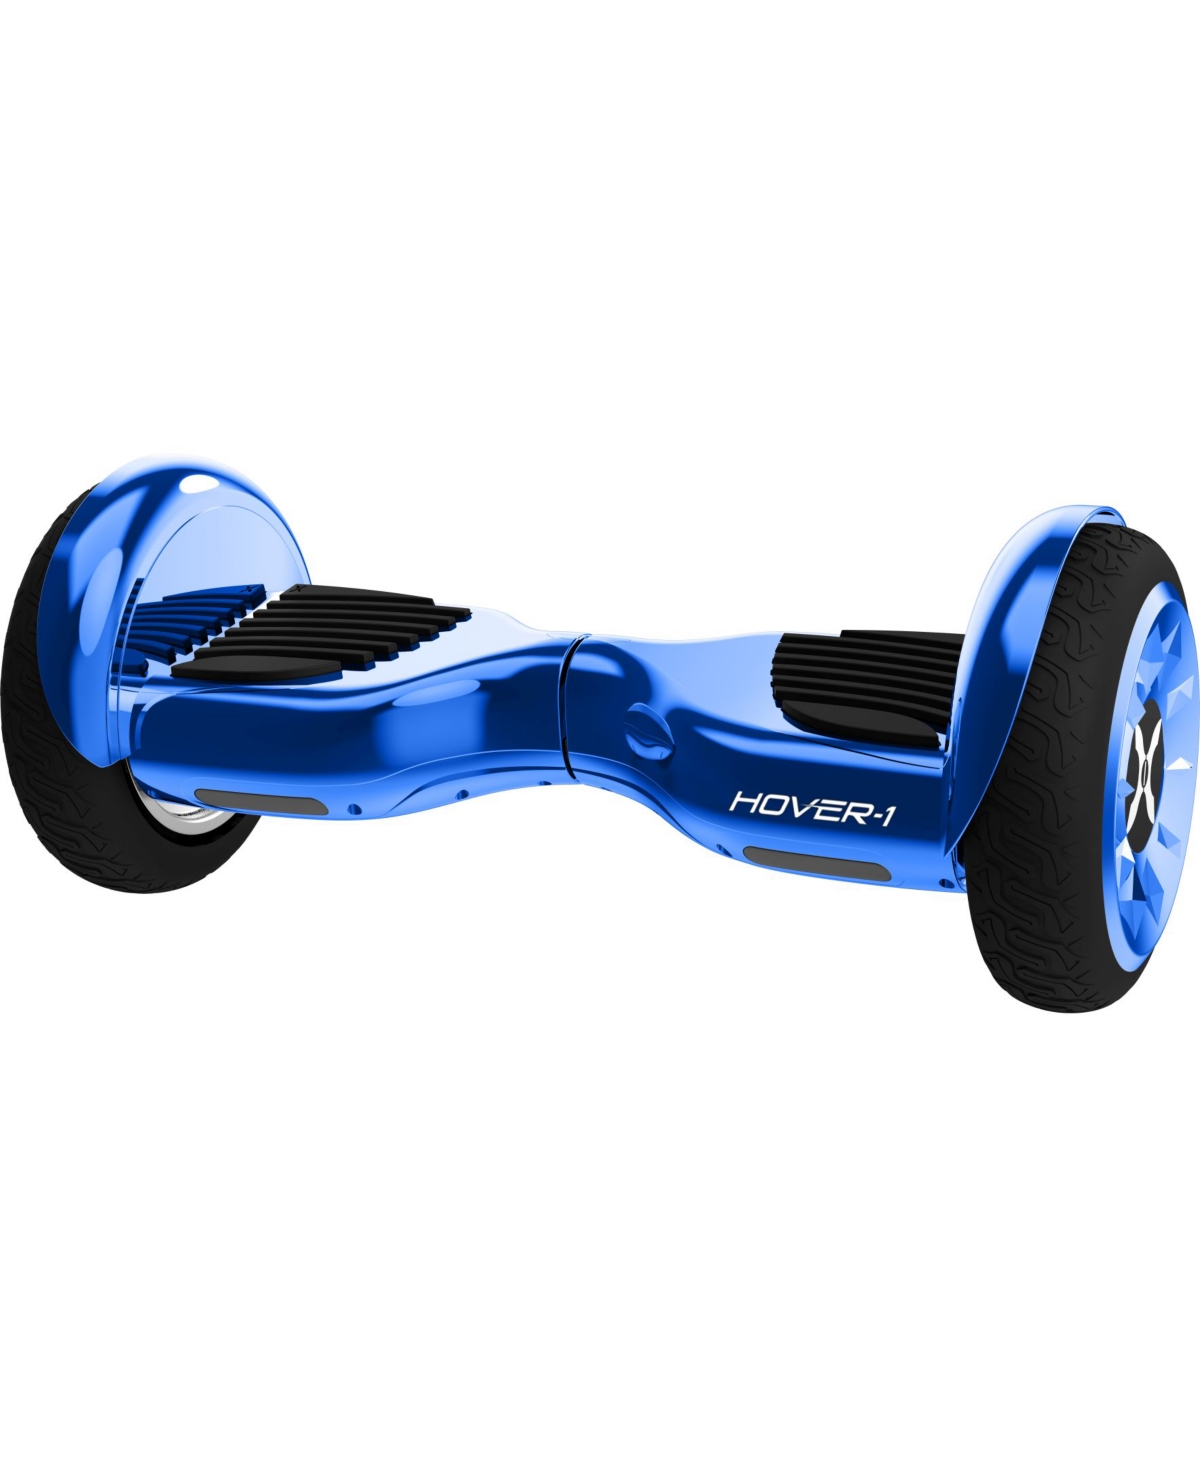 Hover-1 Titan Hoverboard In Blue